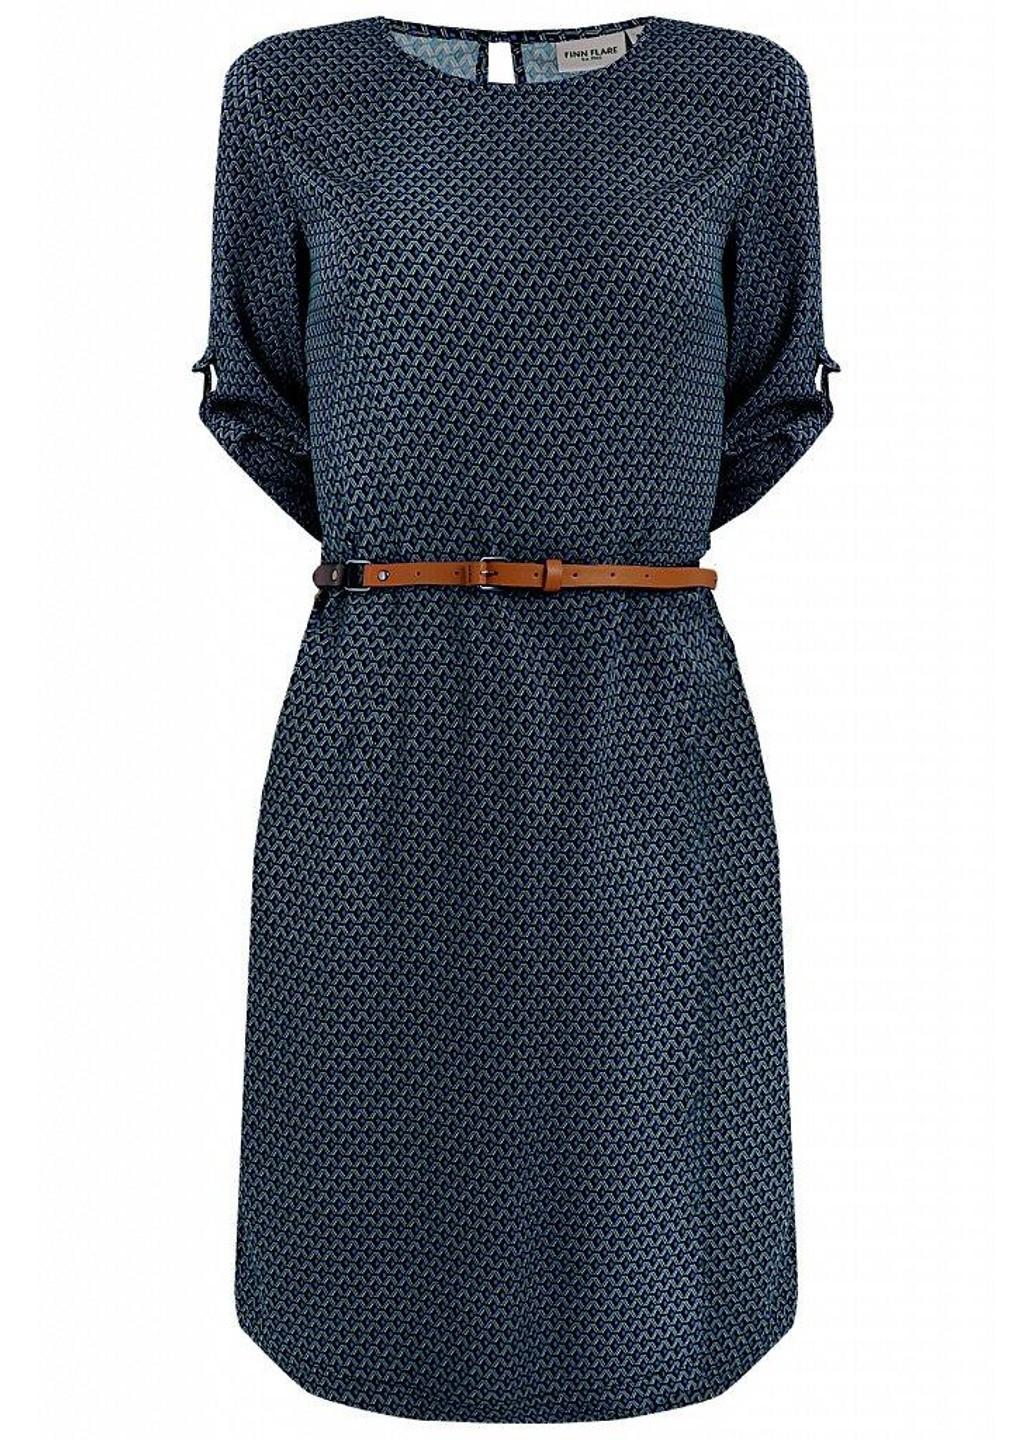 Темно-синее повседневный платье b19-11049-101 а-силуэт Finn Flare с геометрическим узором